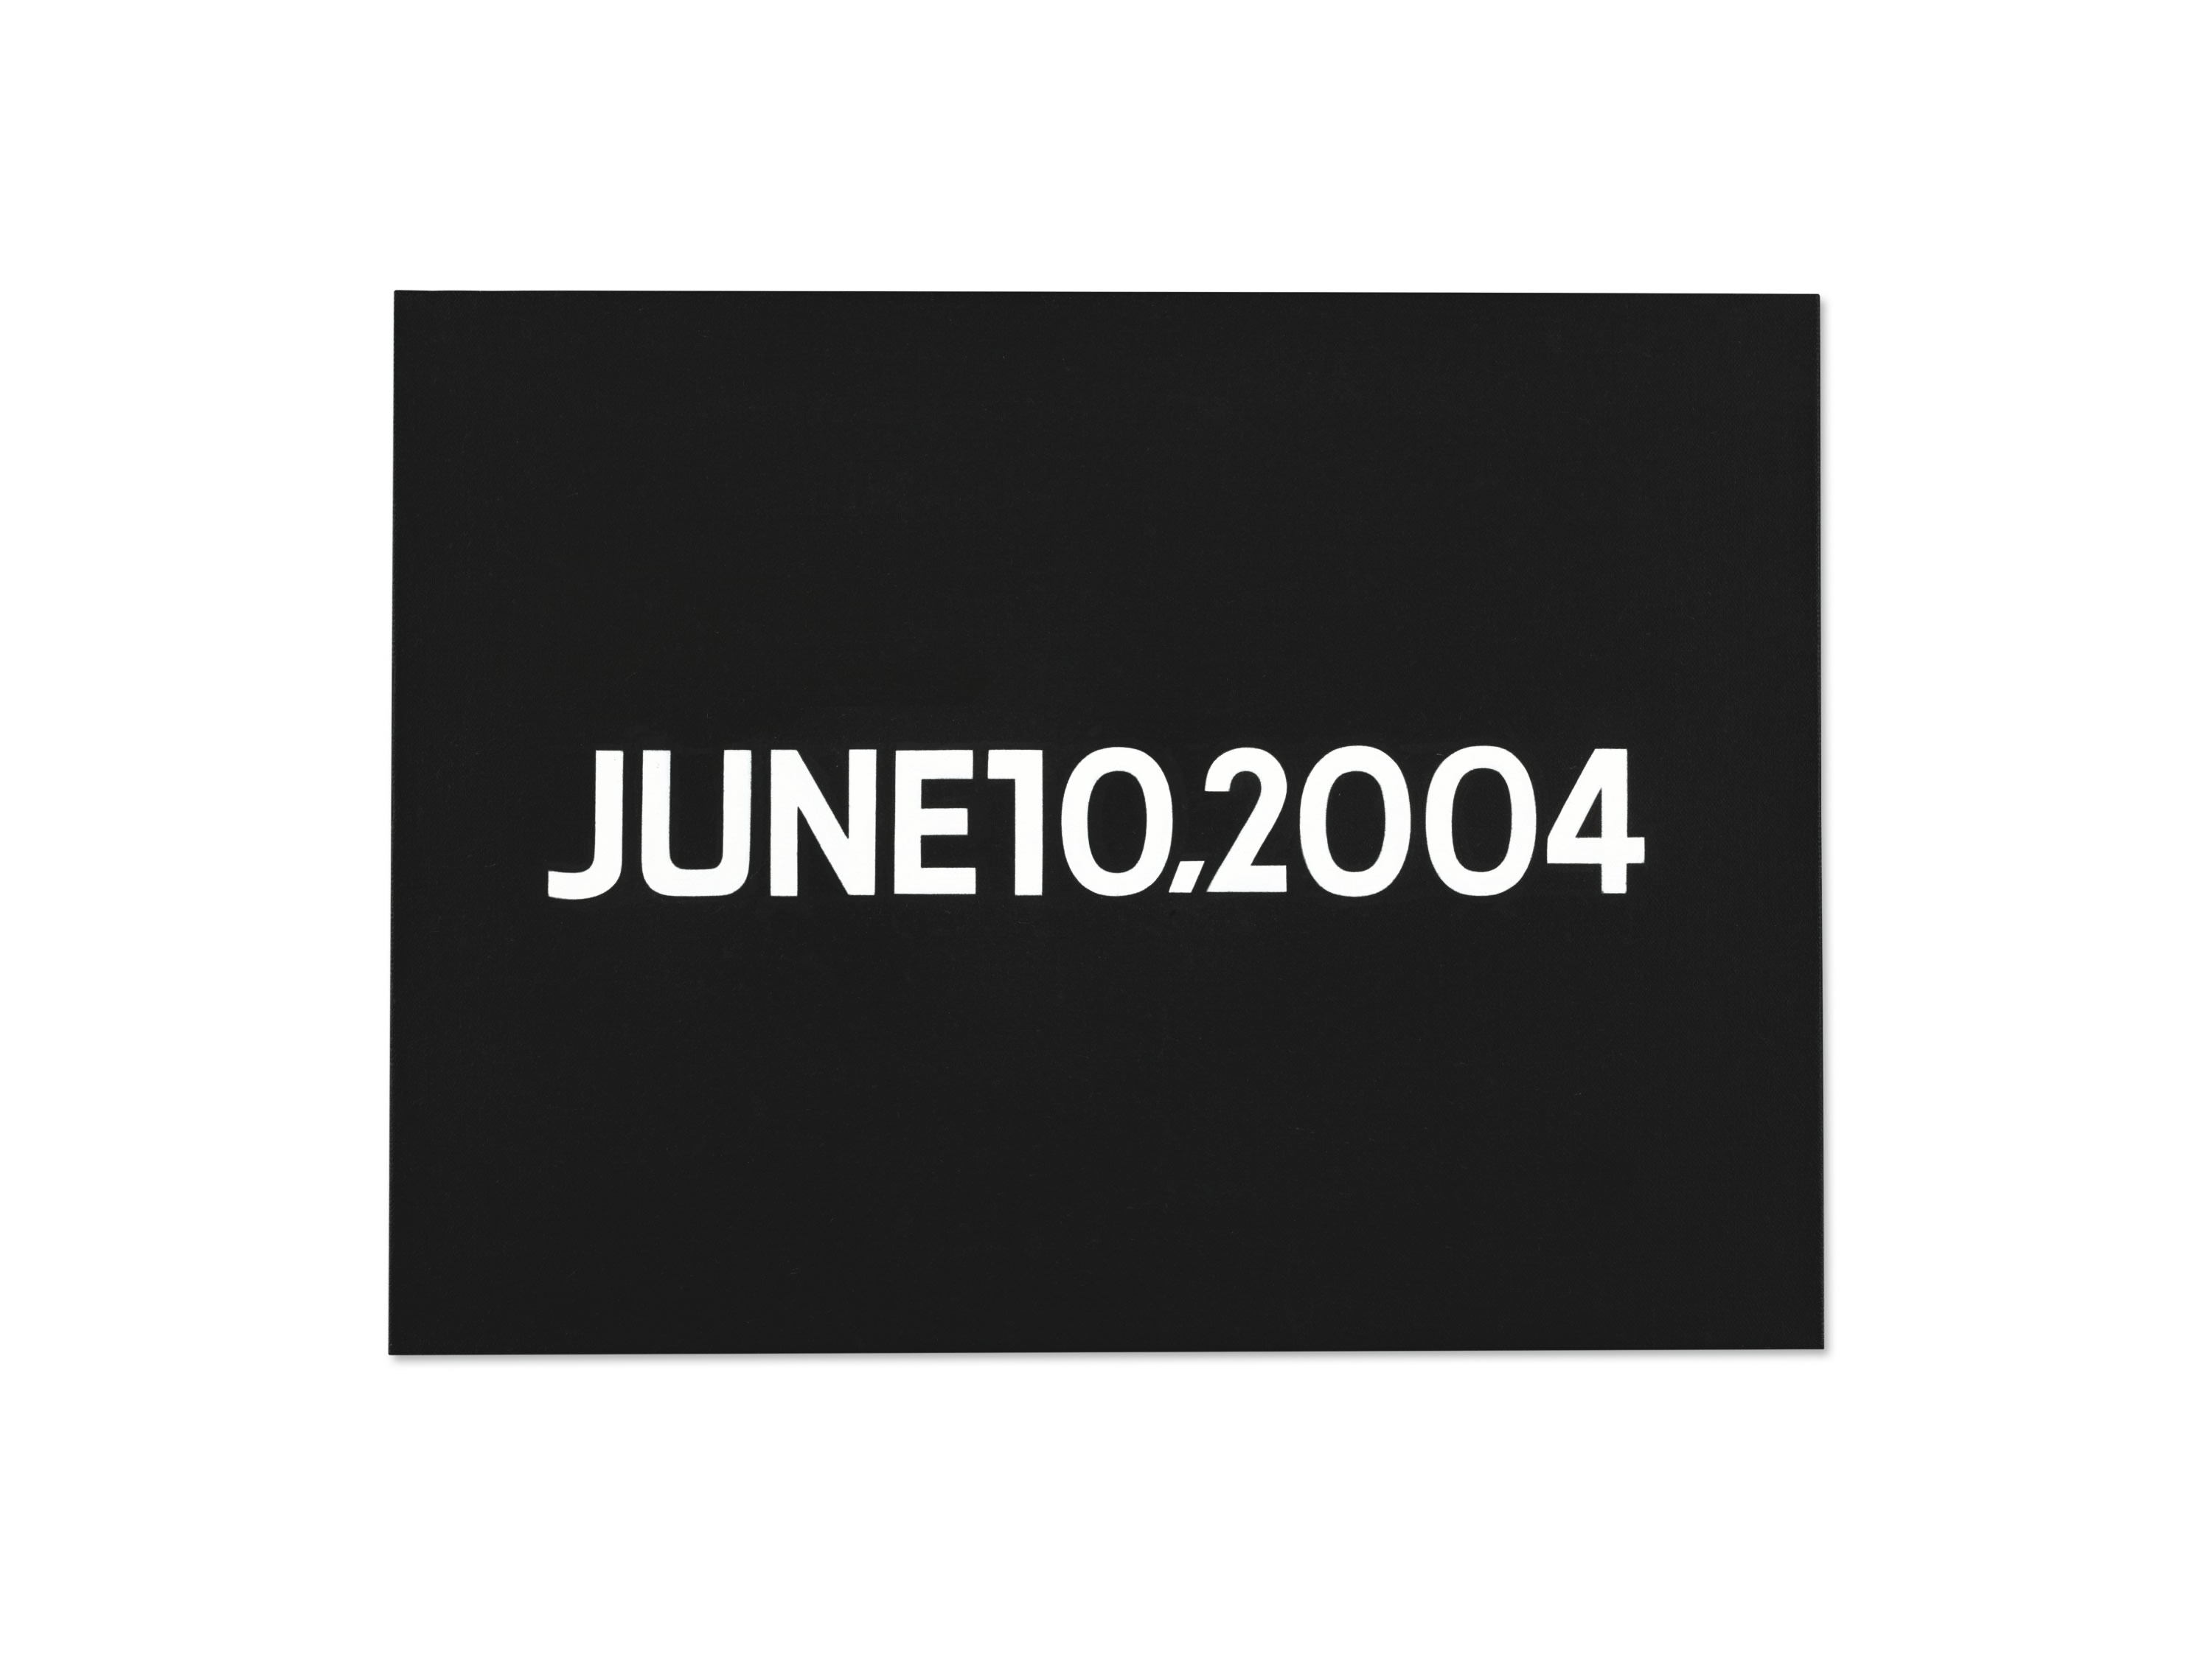 On Kawara: JUNE 10, 2004, Liquitex on canvas, 25.7 x 34.6 cm, 2004.